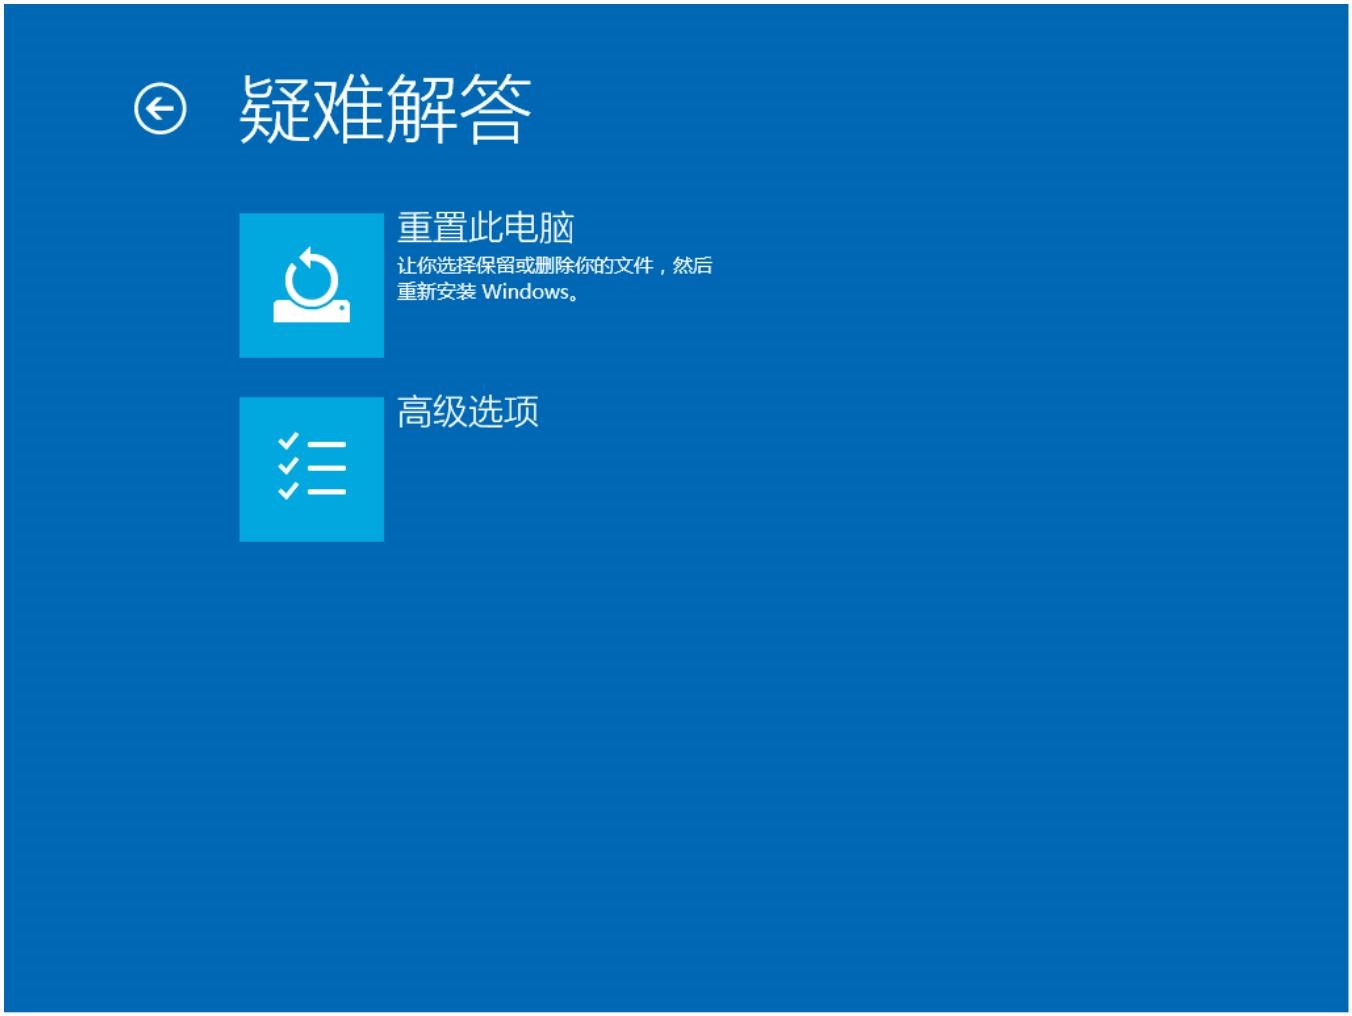 Windows10用户手册 - Windows 10 系统维护  - 系统备份与还原